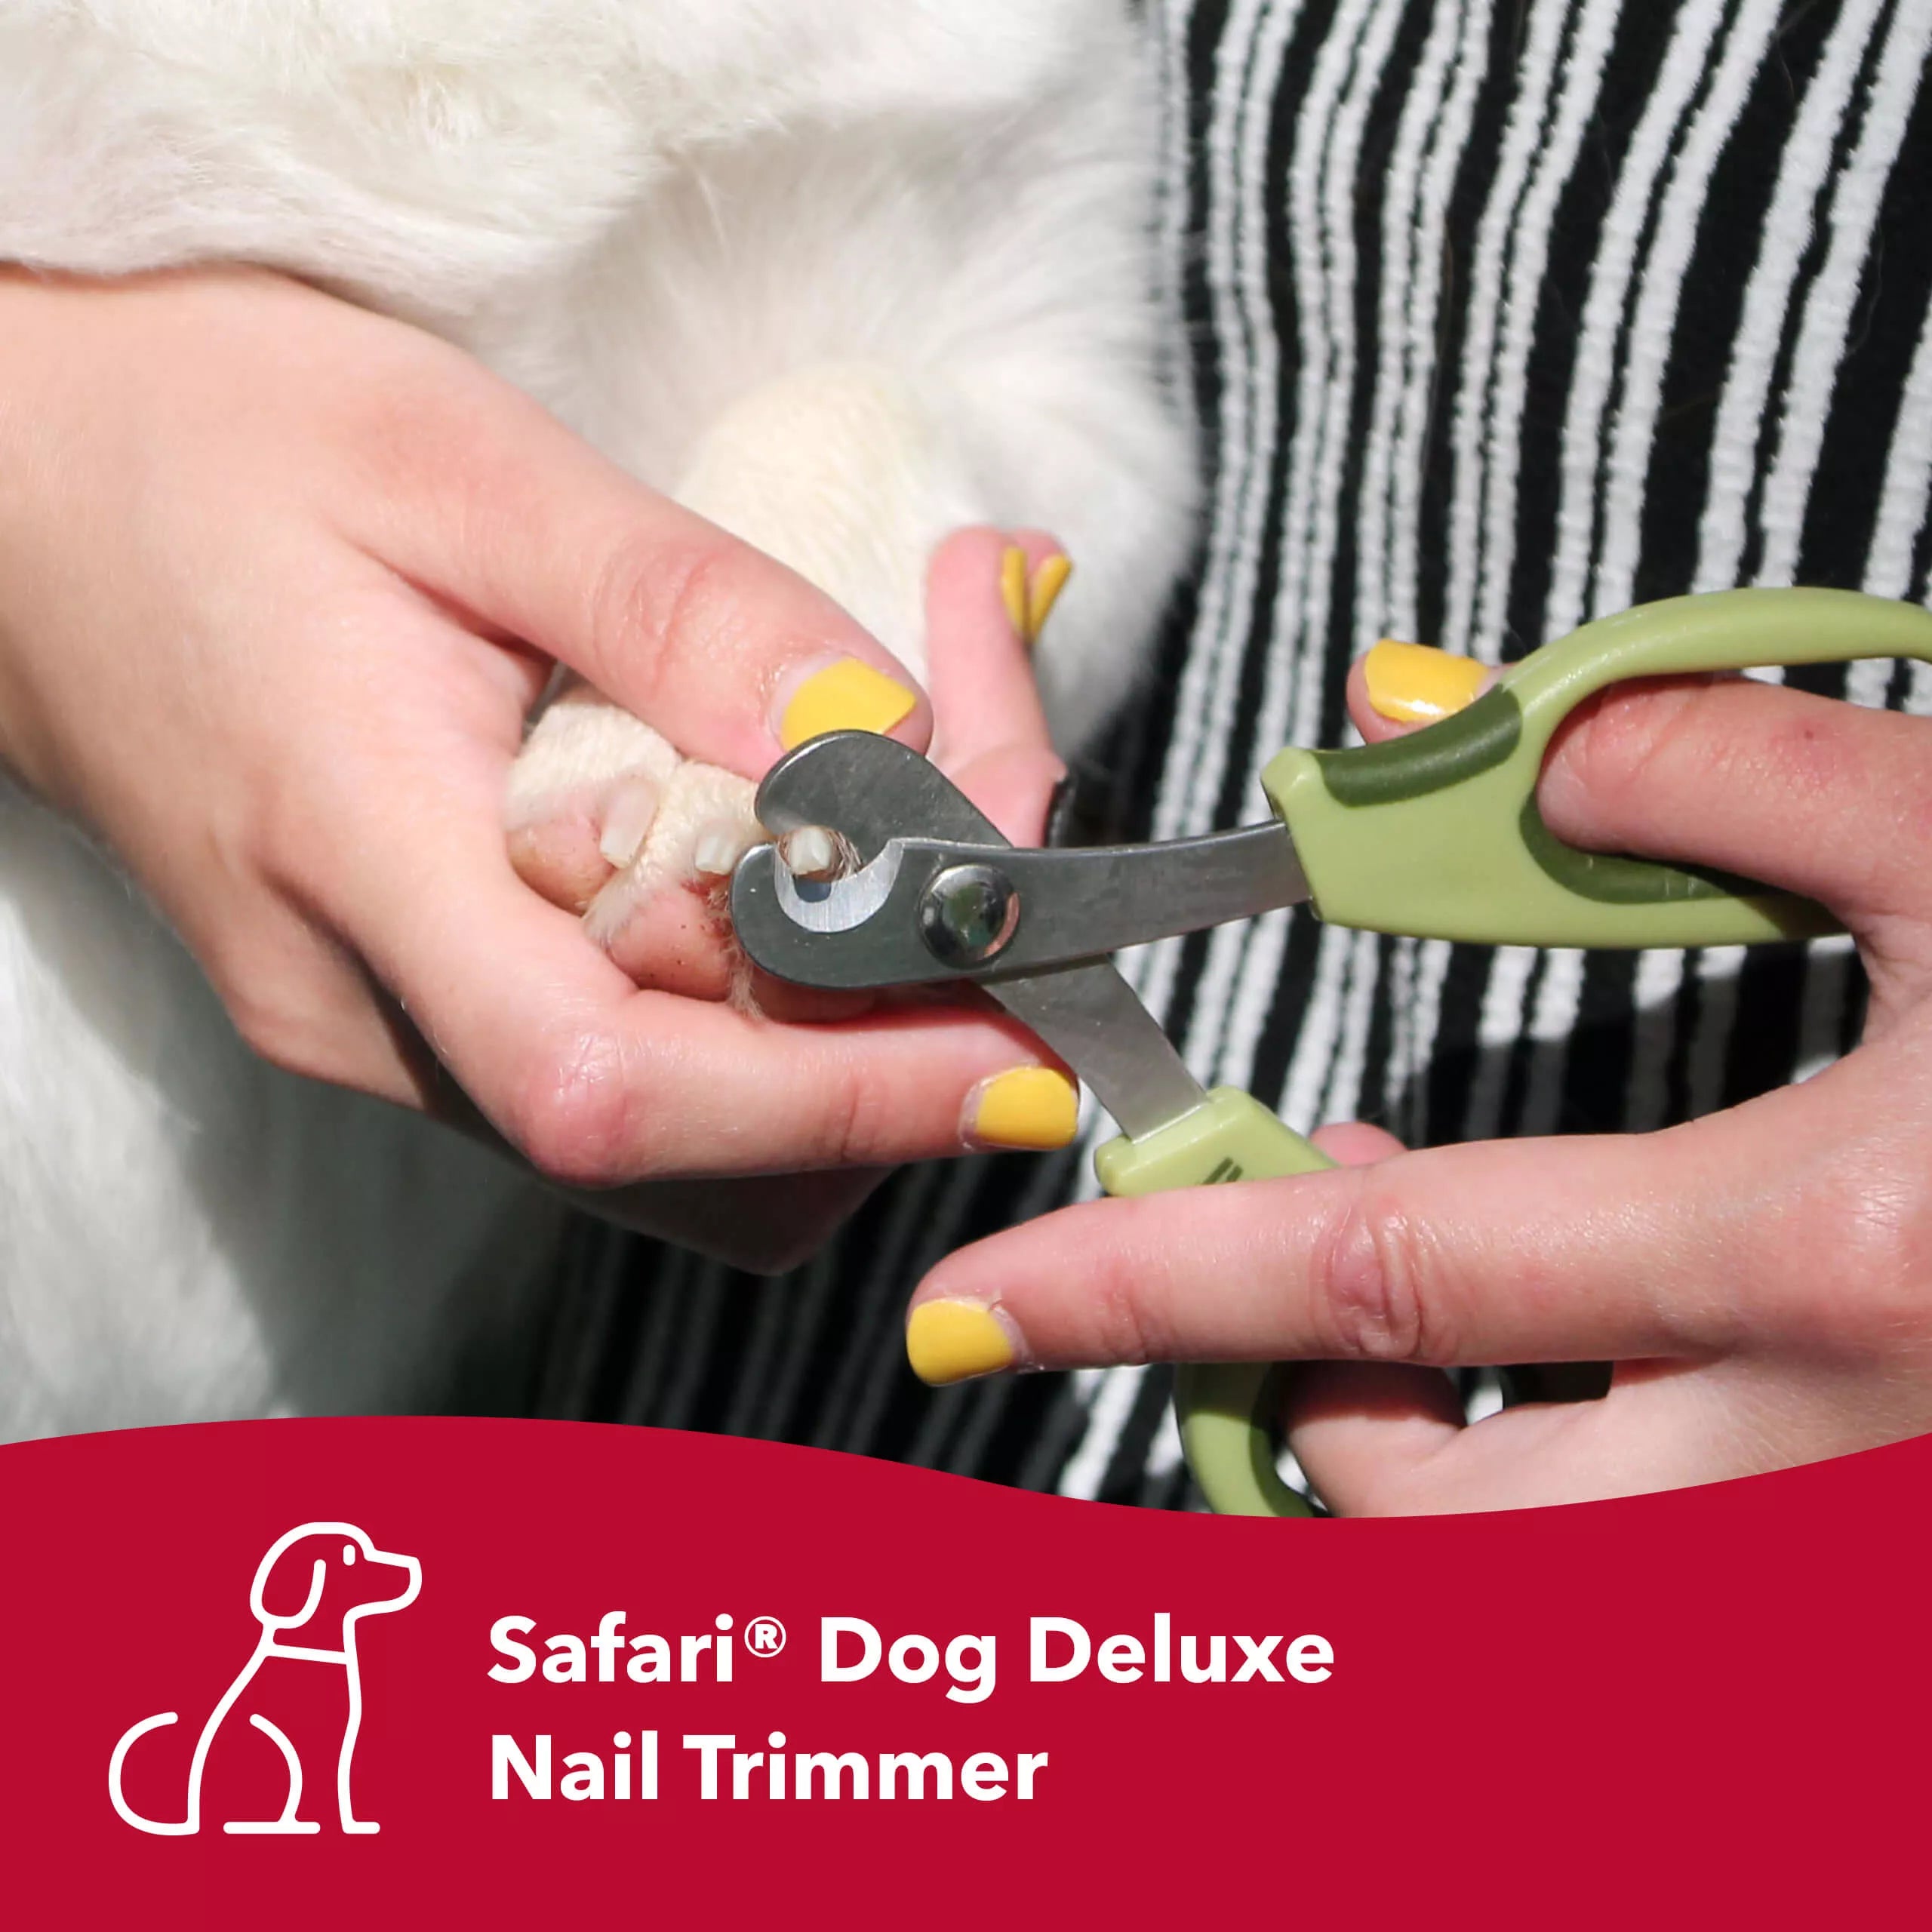 Safari Dog Nail Trimmer Deluxe - Small Dog